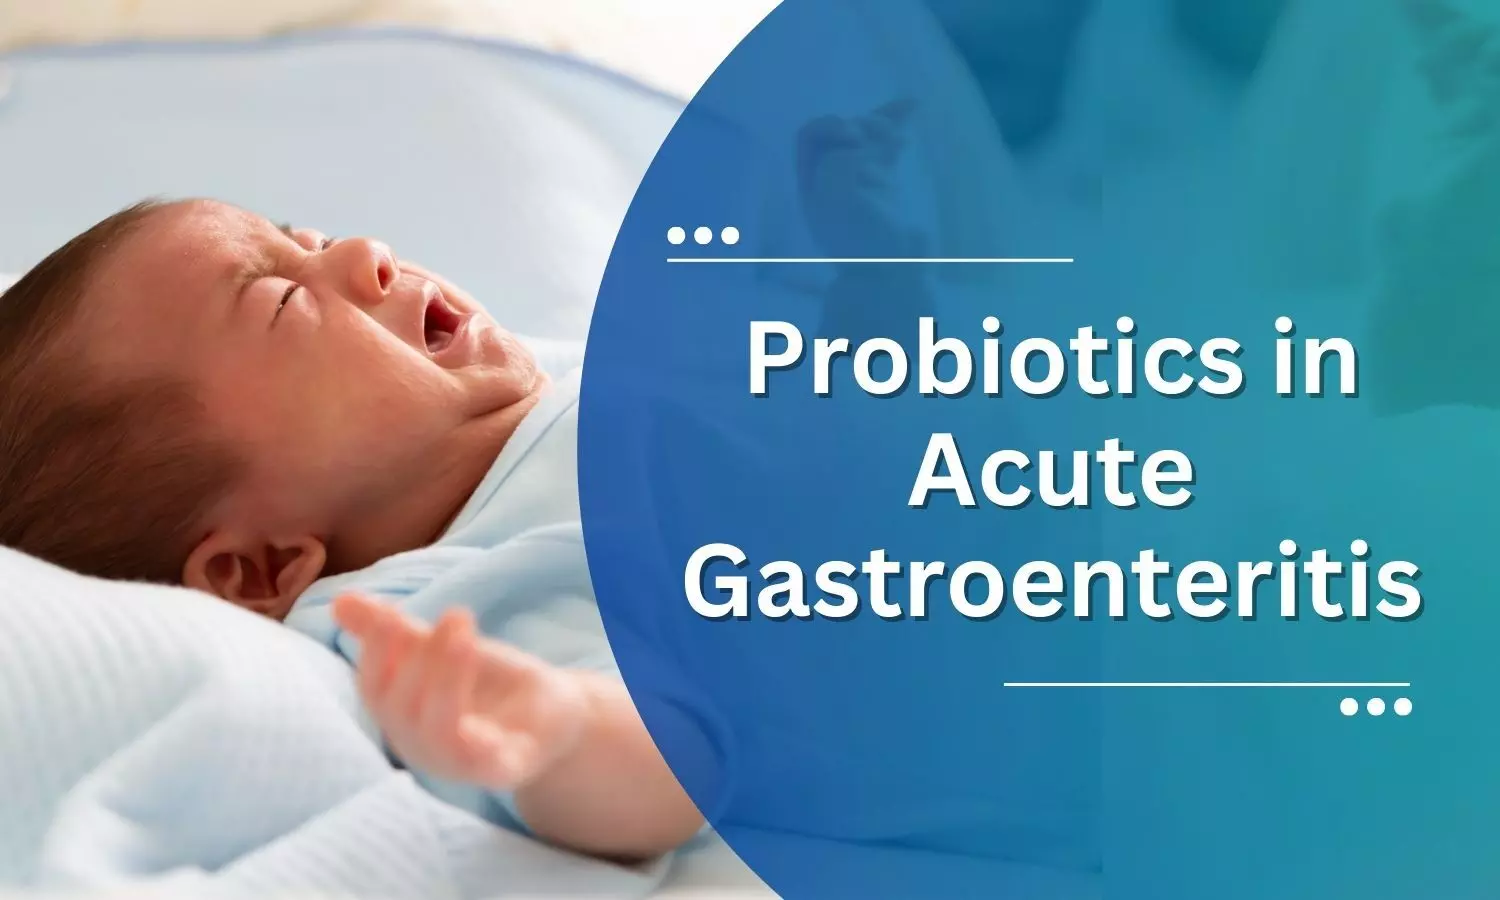 Role of Probiotics in Acute Gastroenteritis: Review